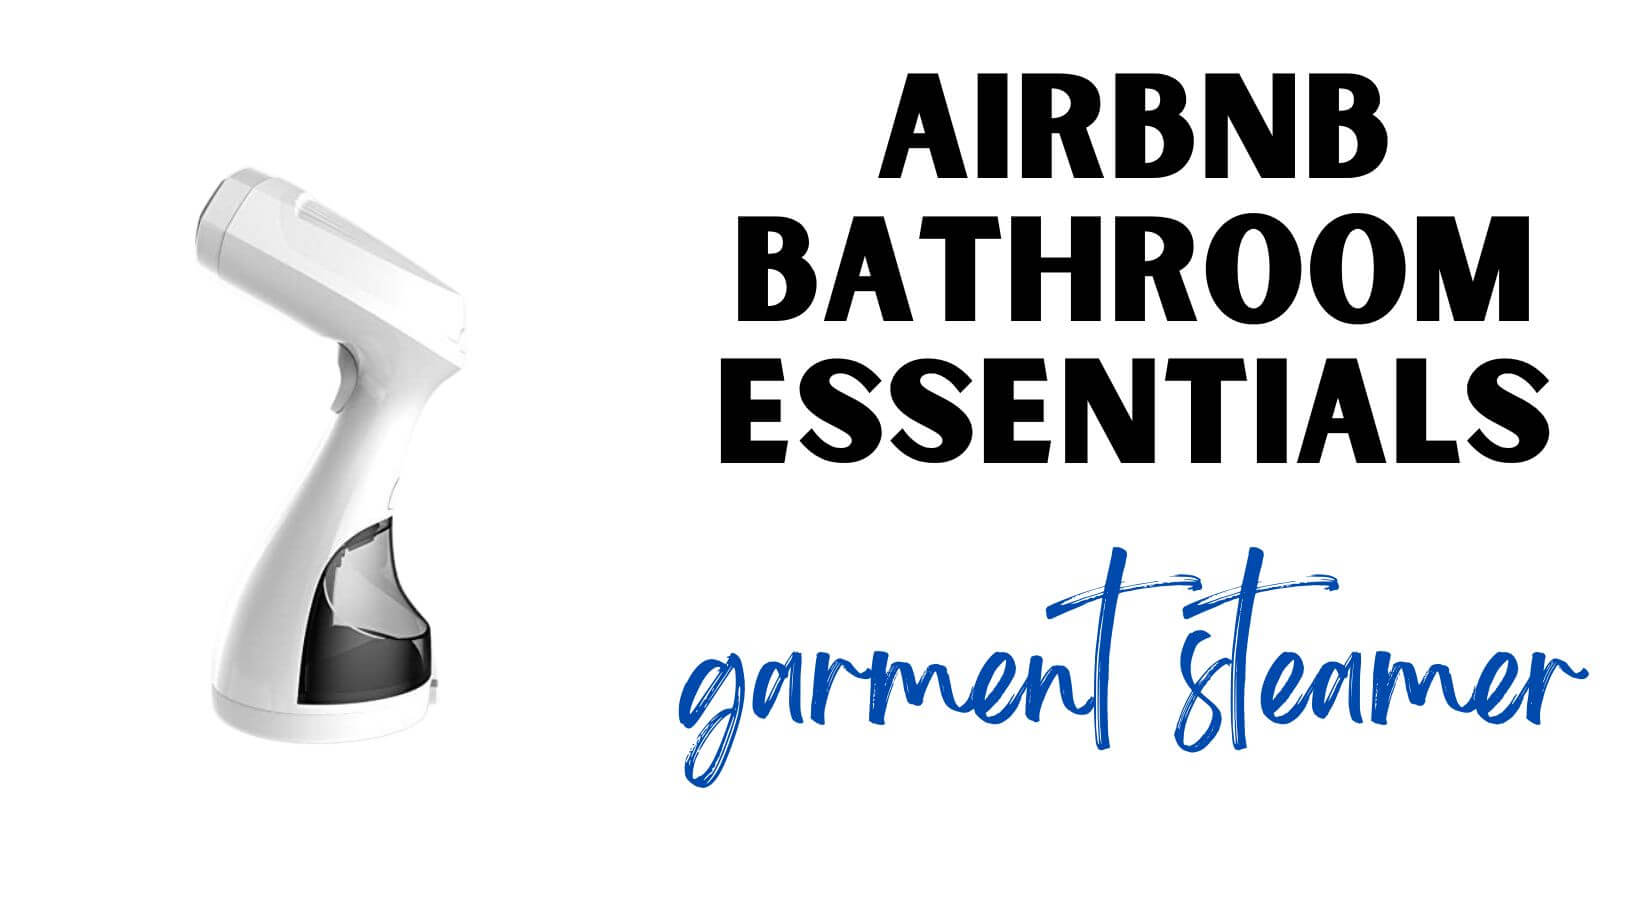 Airbnb Bathroom Essentials Garment Steamer